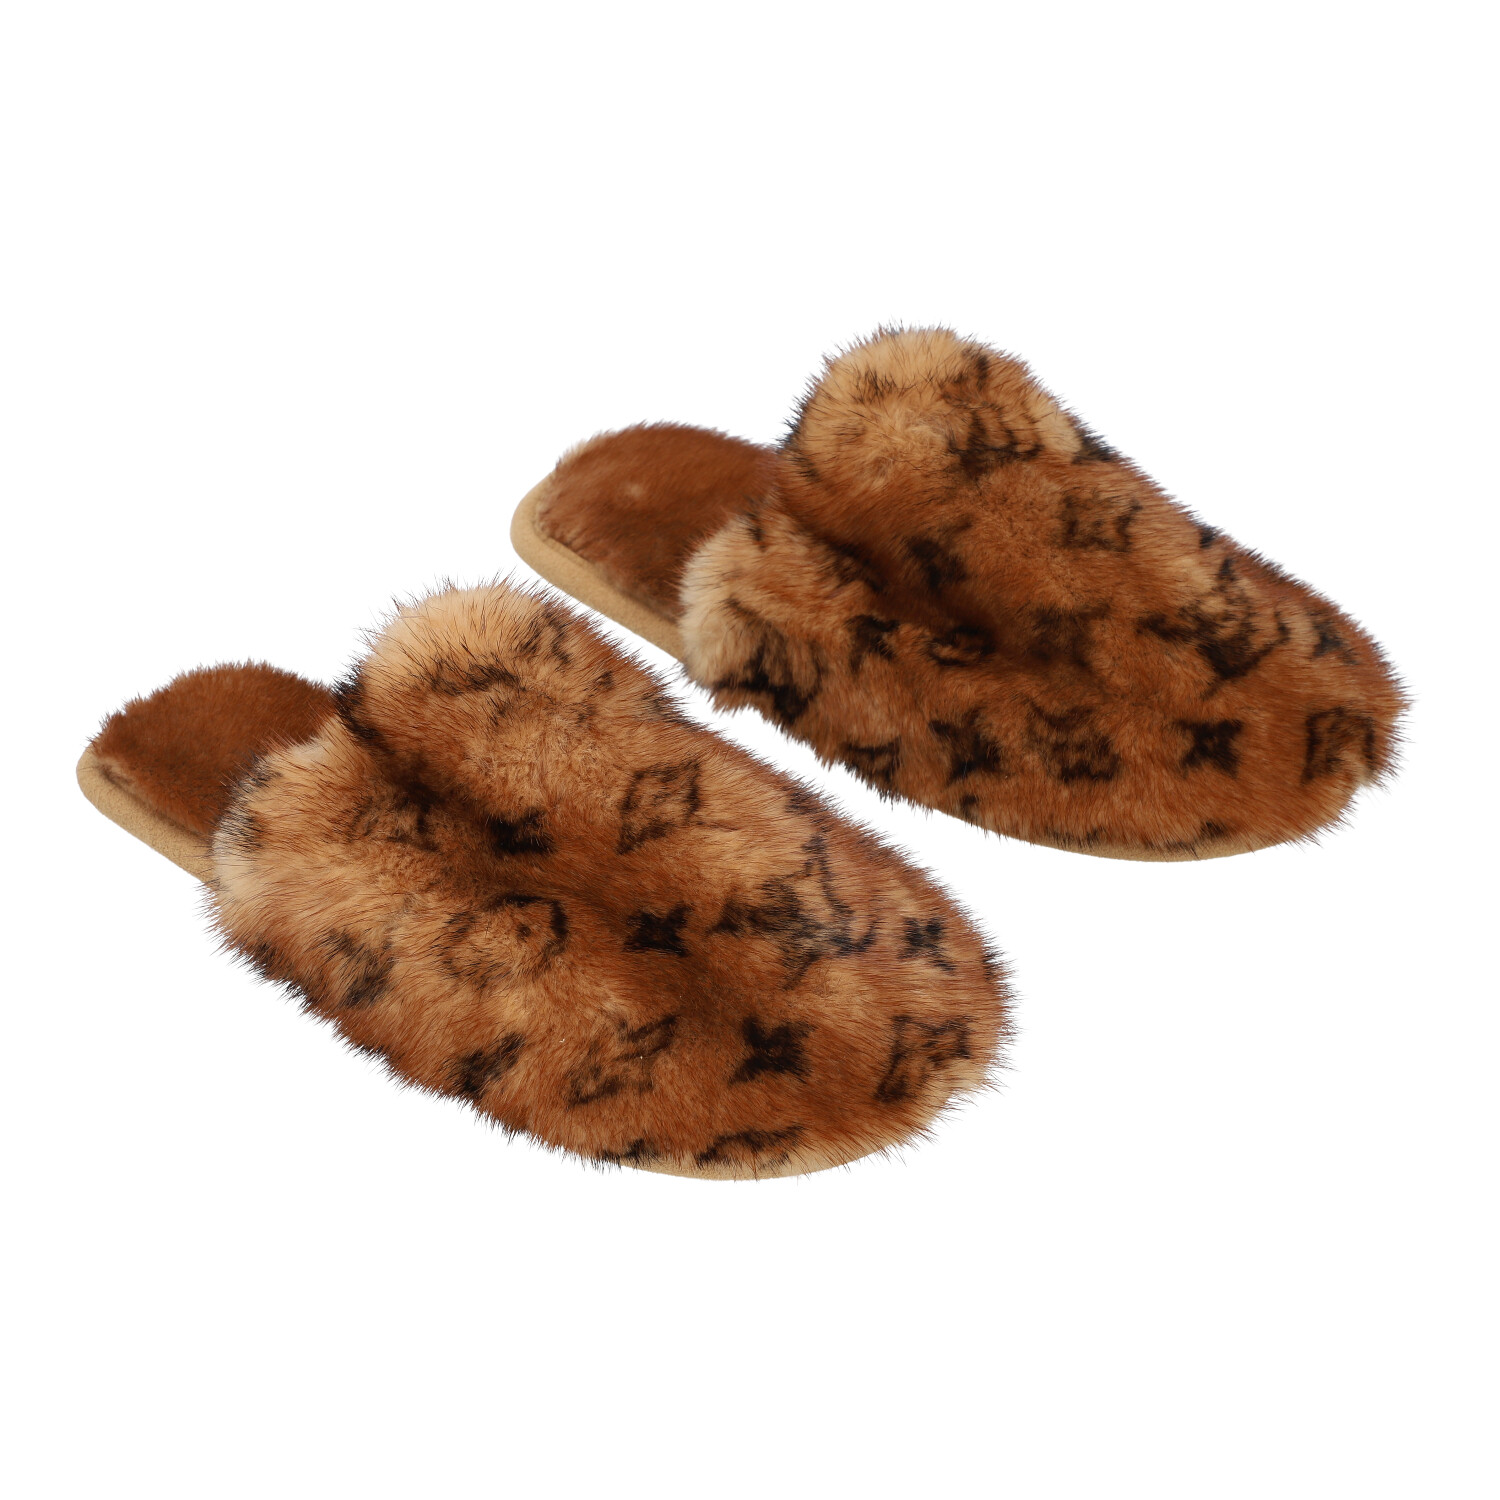 Buy Lv Fur Slippers online